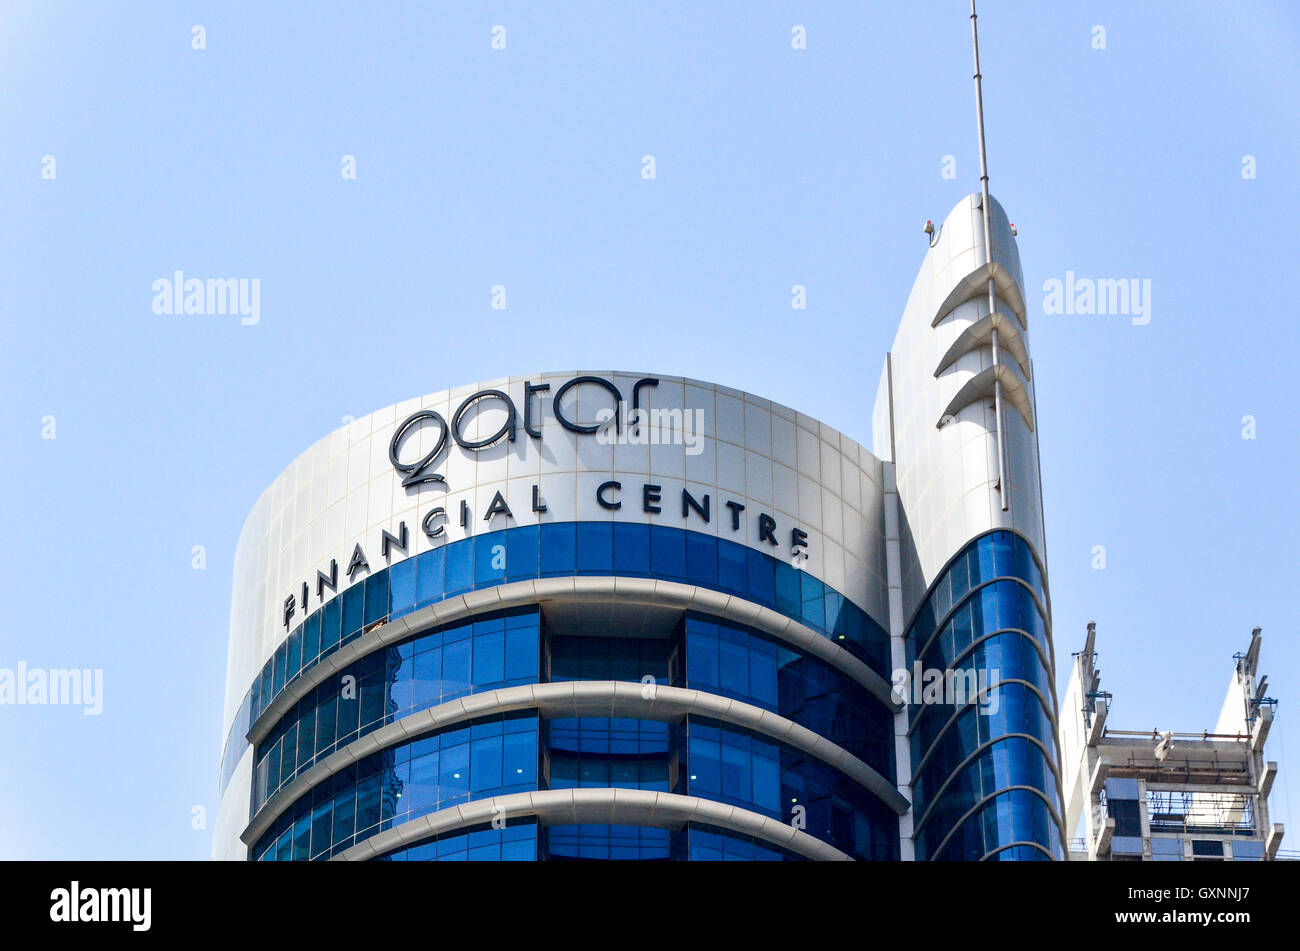 Qatar Financial Centre, Doha Stock Photo